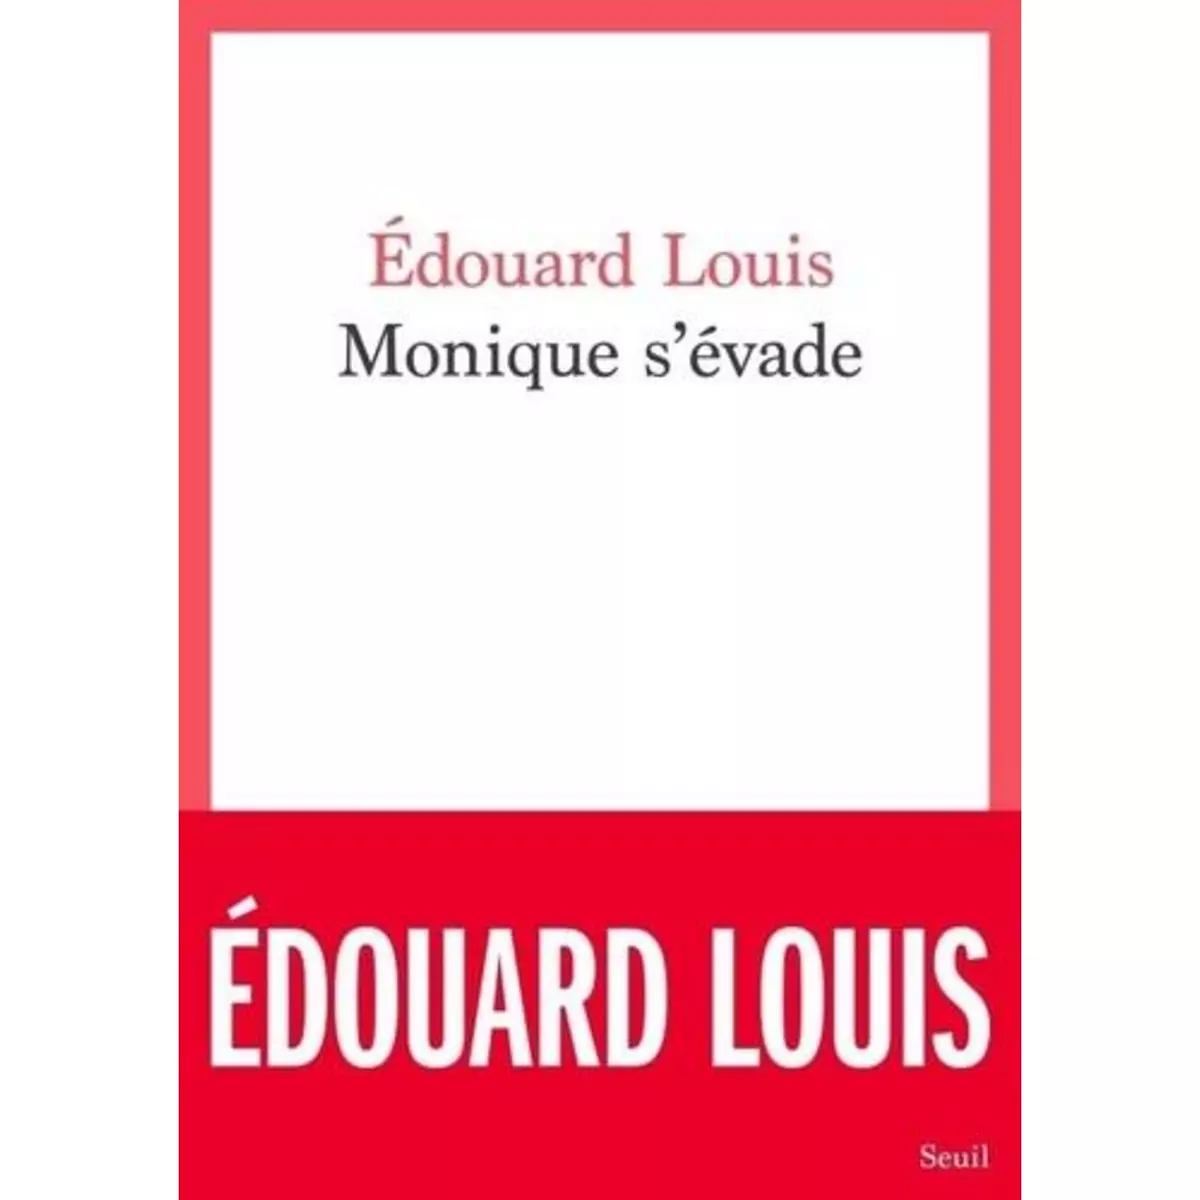  MONIQUE S'EVADE, Louis Edouard